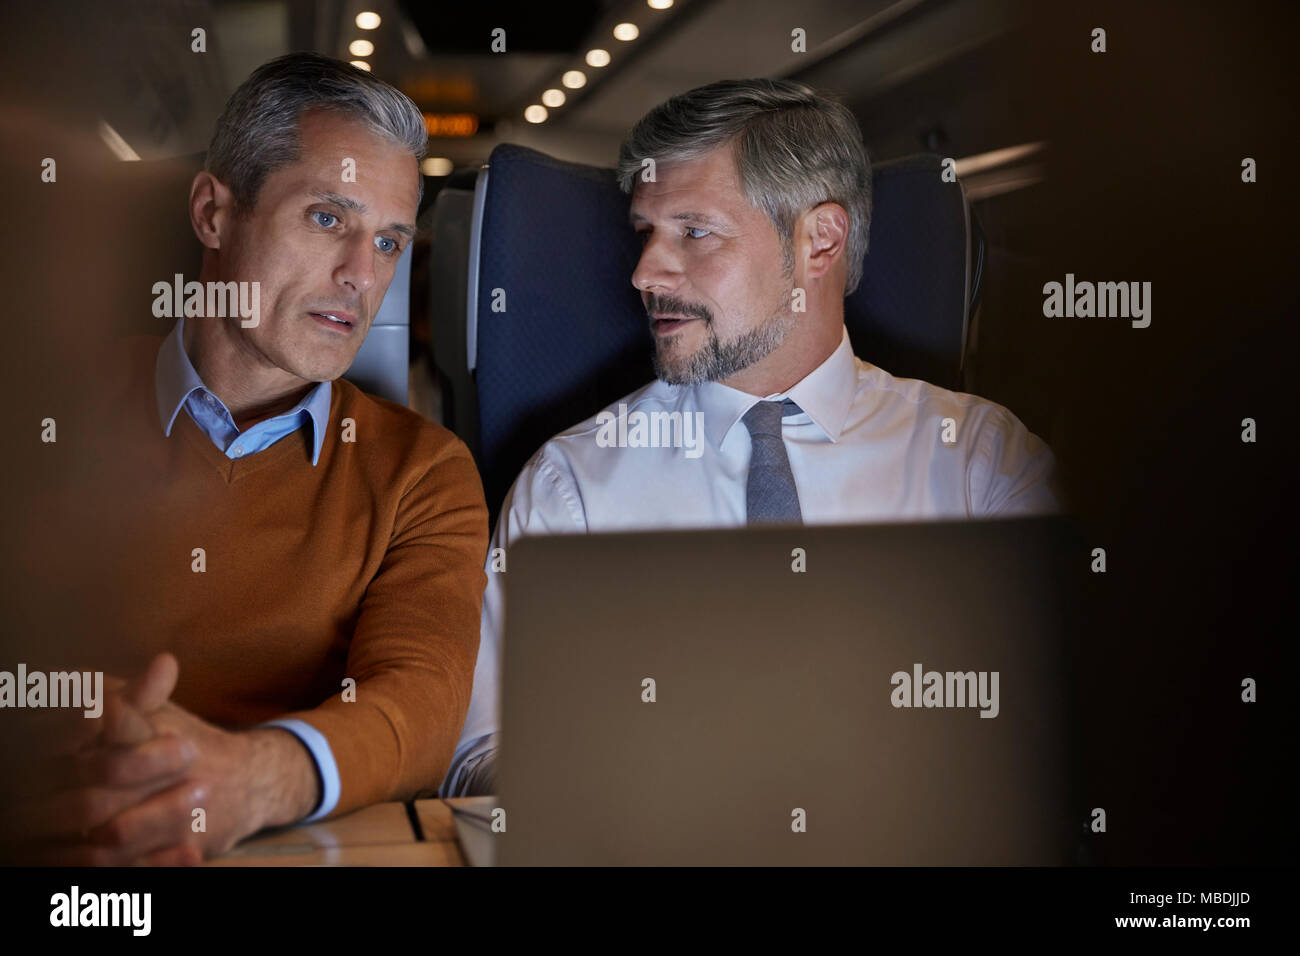 Businessmen talking, working at laptop on passenger train at night Stock Photo